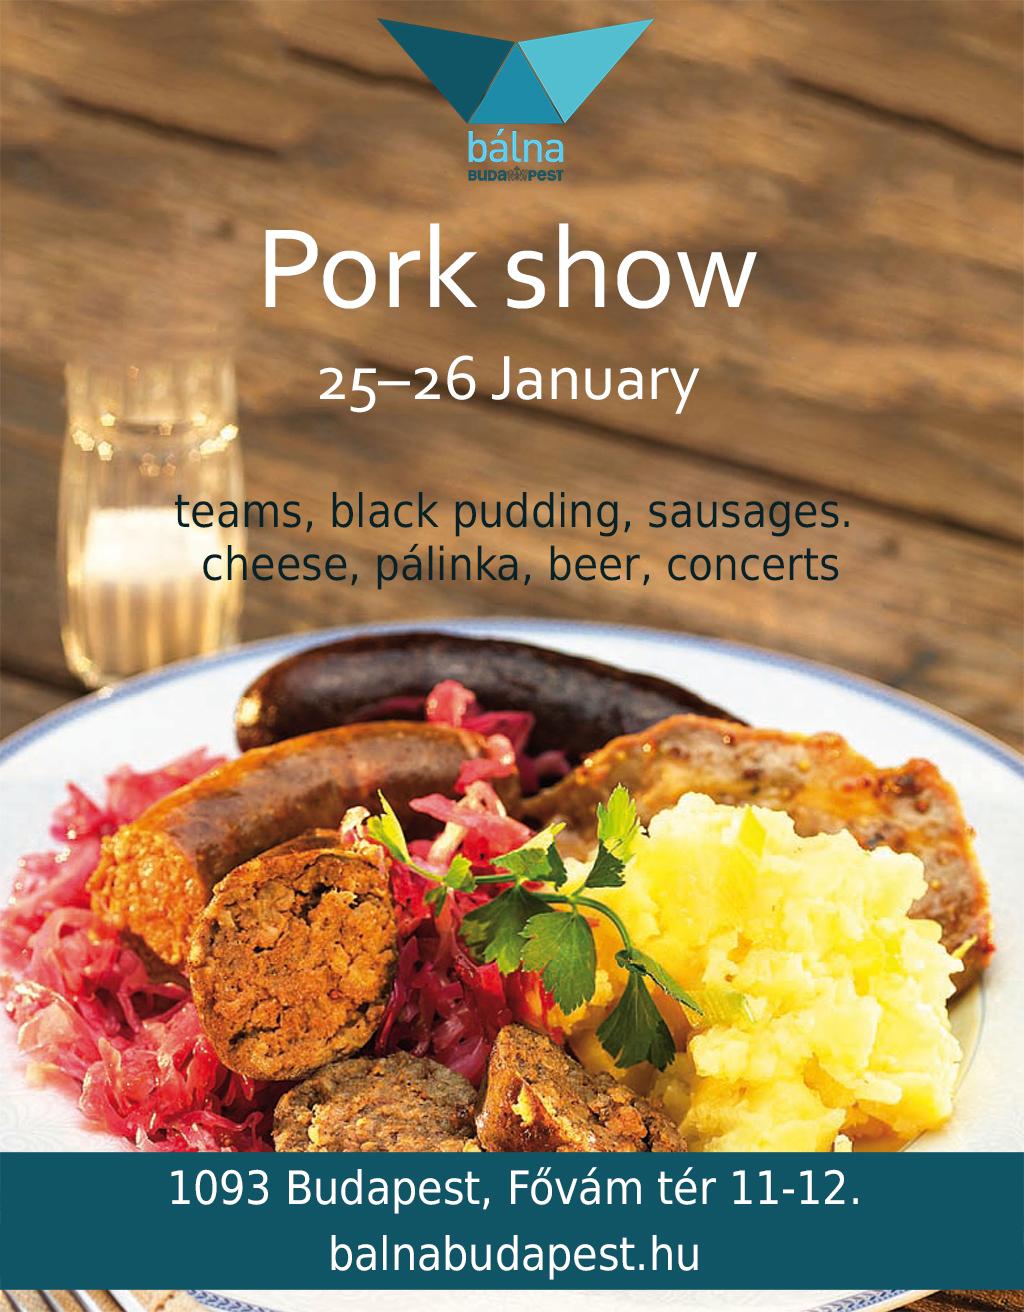 'Pork Show', Bálna Budapest, 25 - 26 January